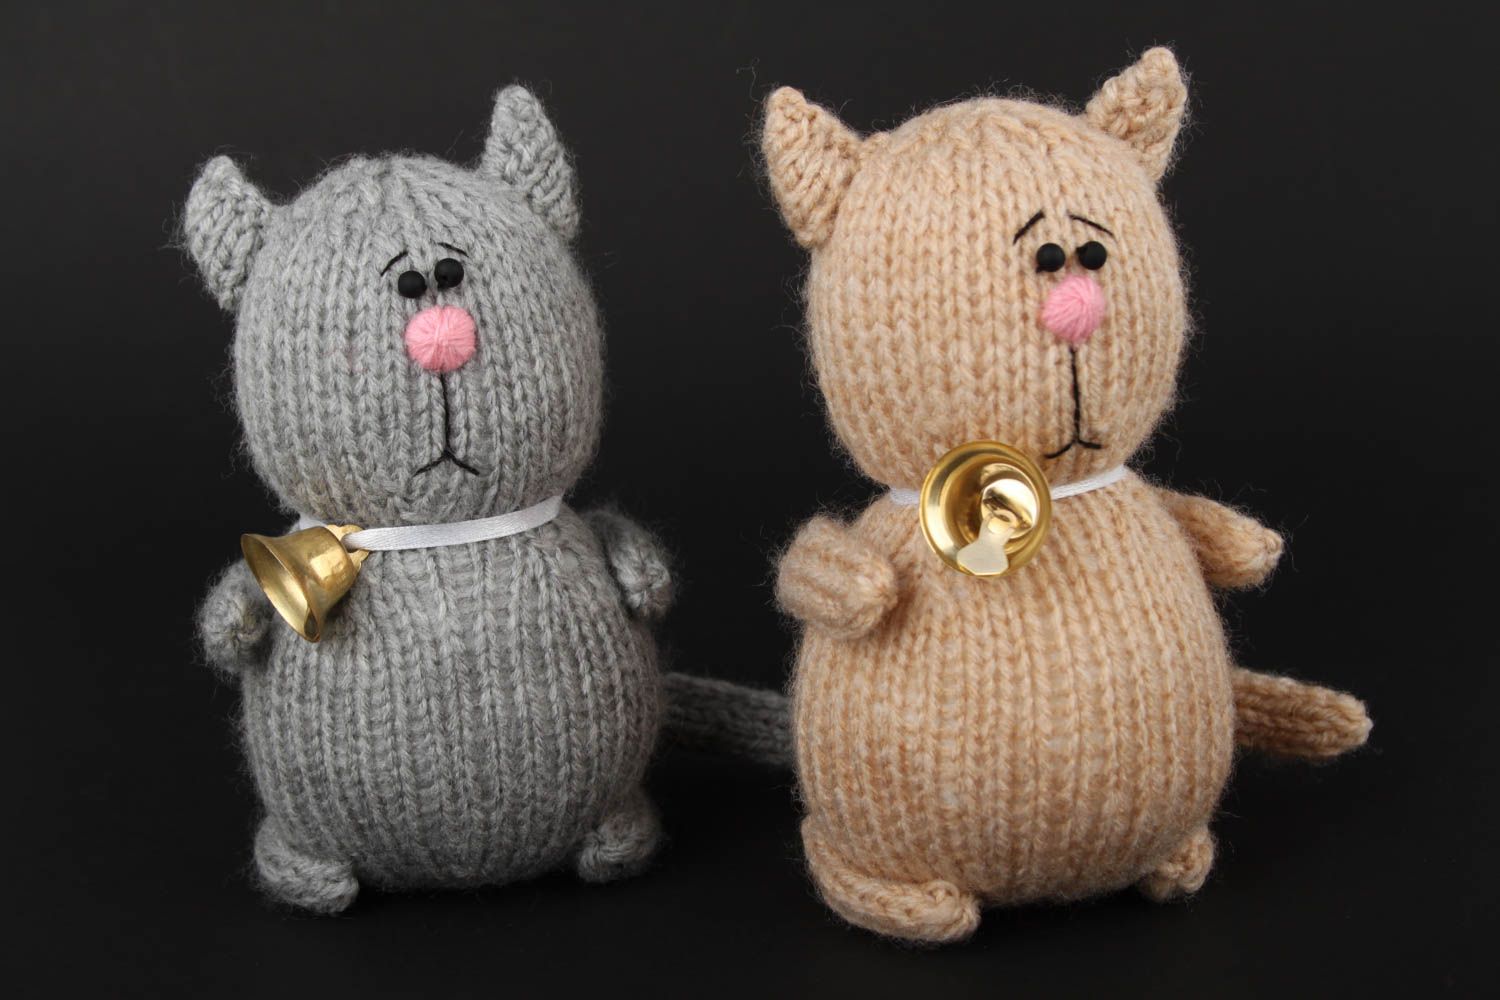 Handmade cute knitted toys 2 beautiful soft toys cats nursery decor ideas photo 2